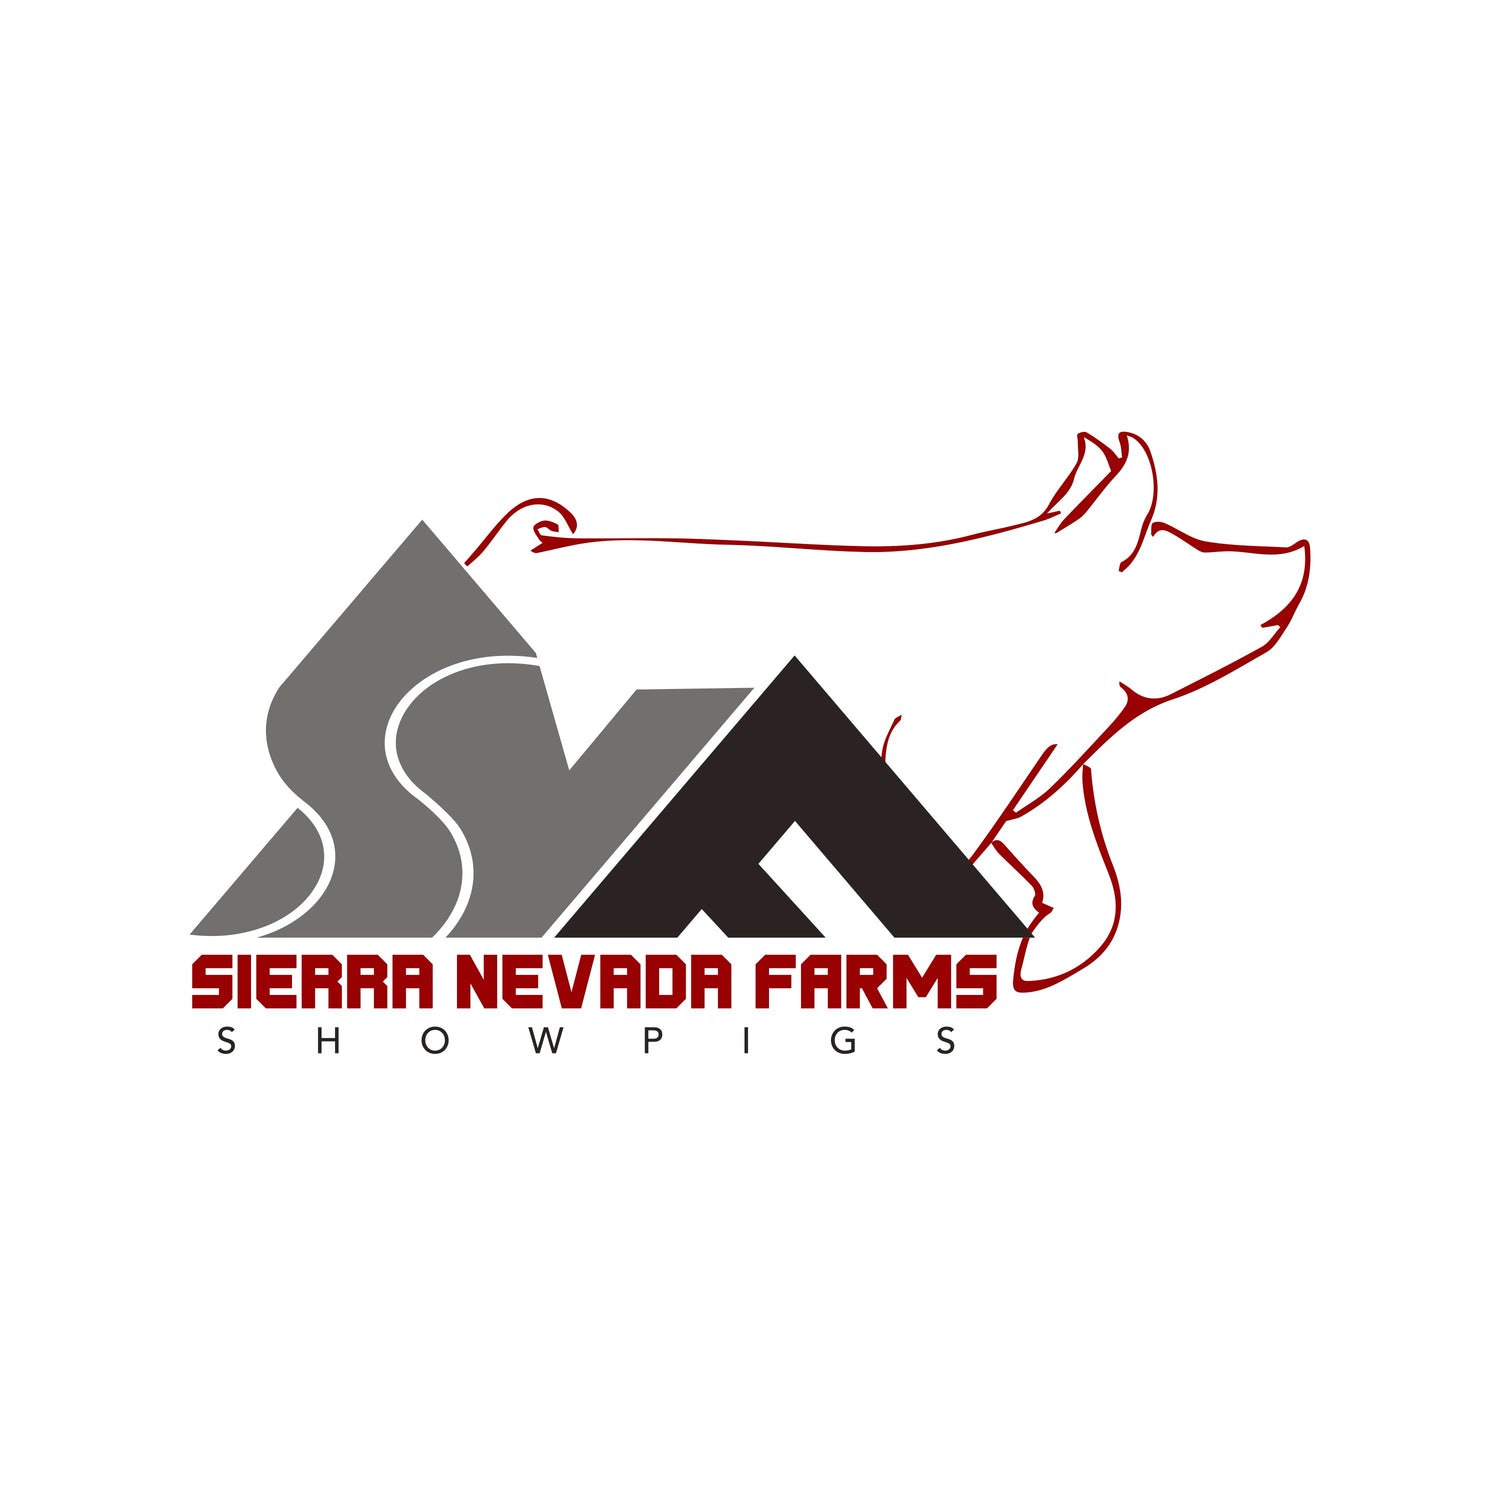 Sierra Nevada Farms Show Pigs PRE-ORDER Apparel Store